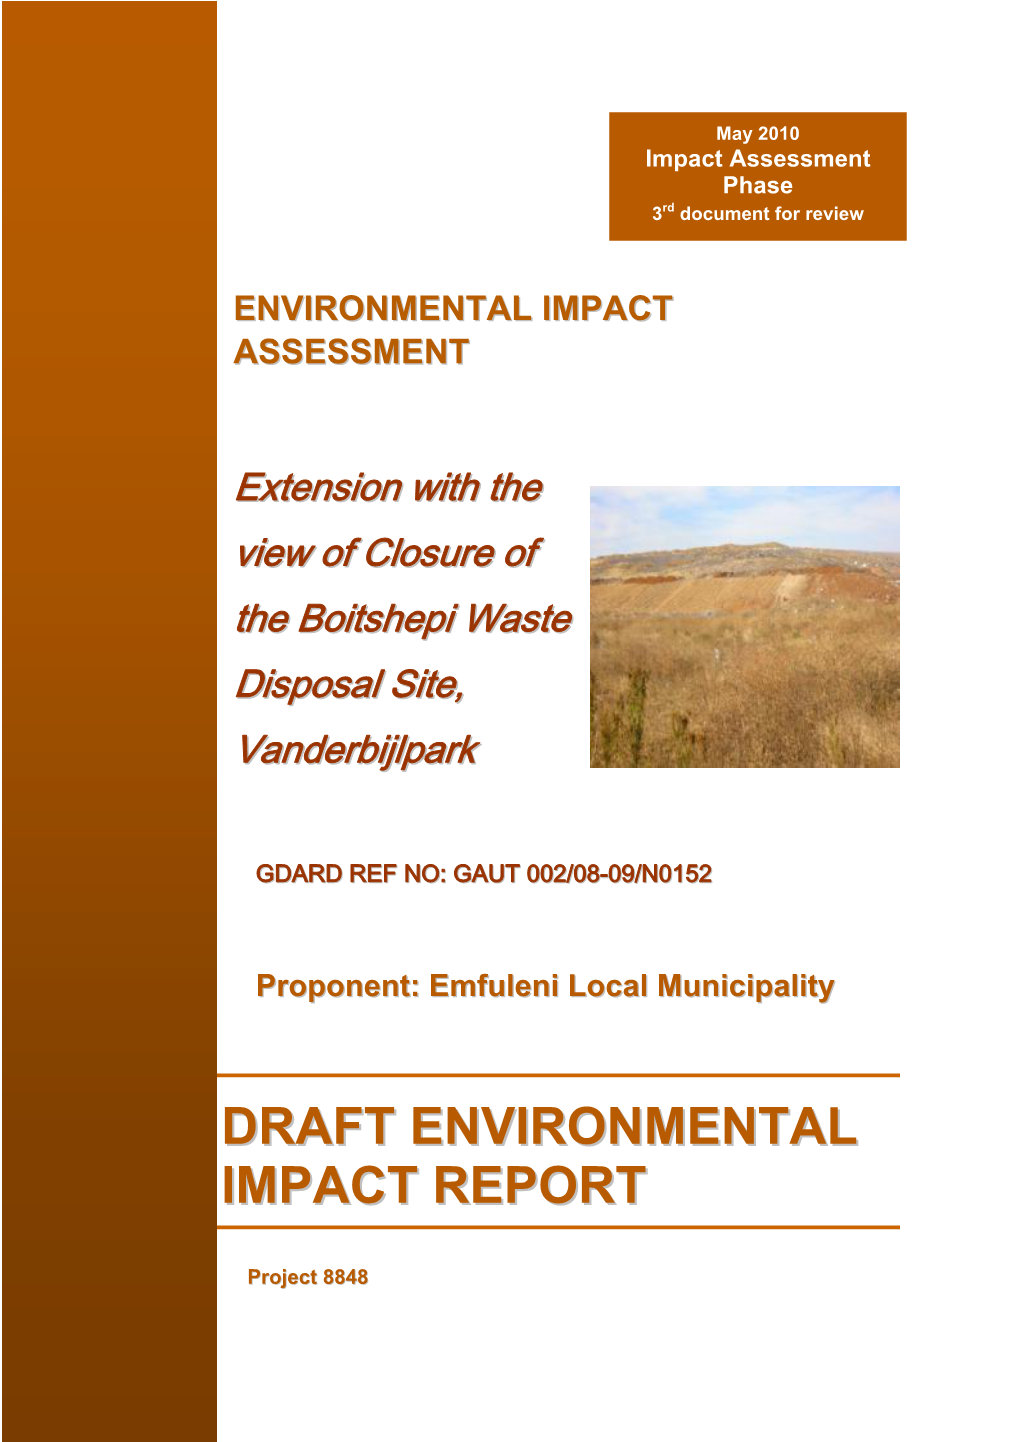 Draft Environmental Impact Report (Draft EIR)